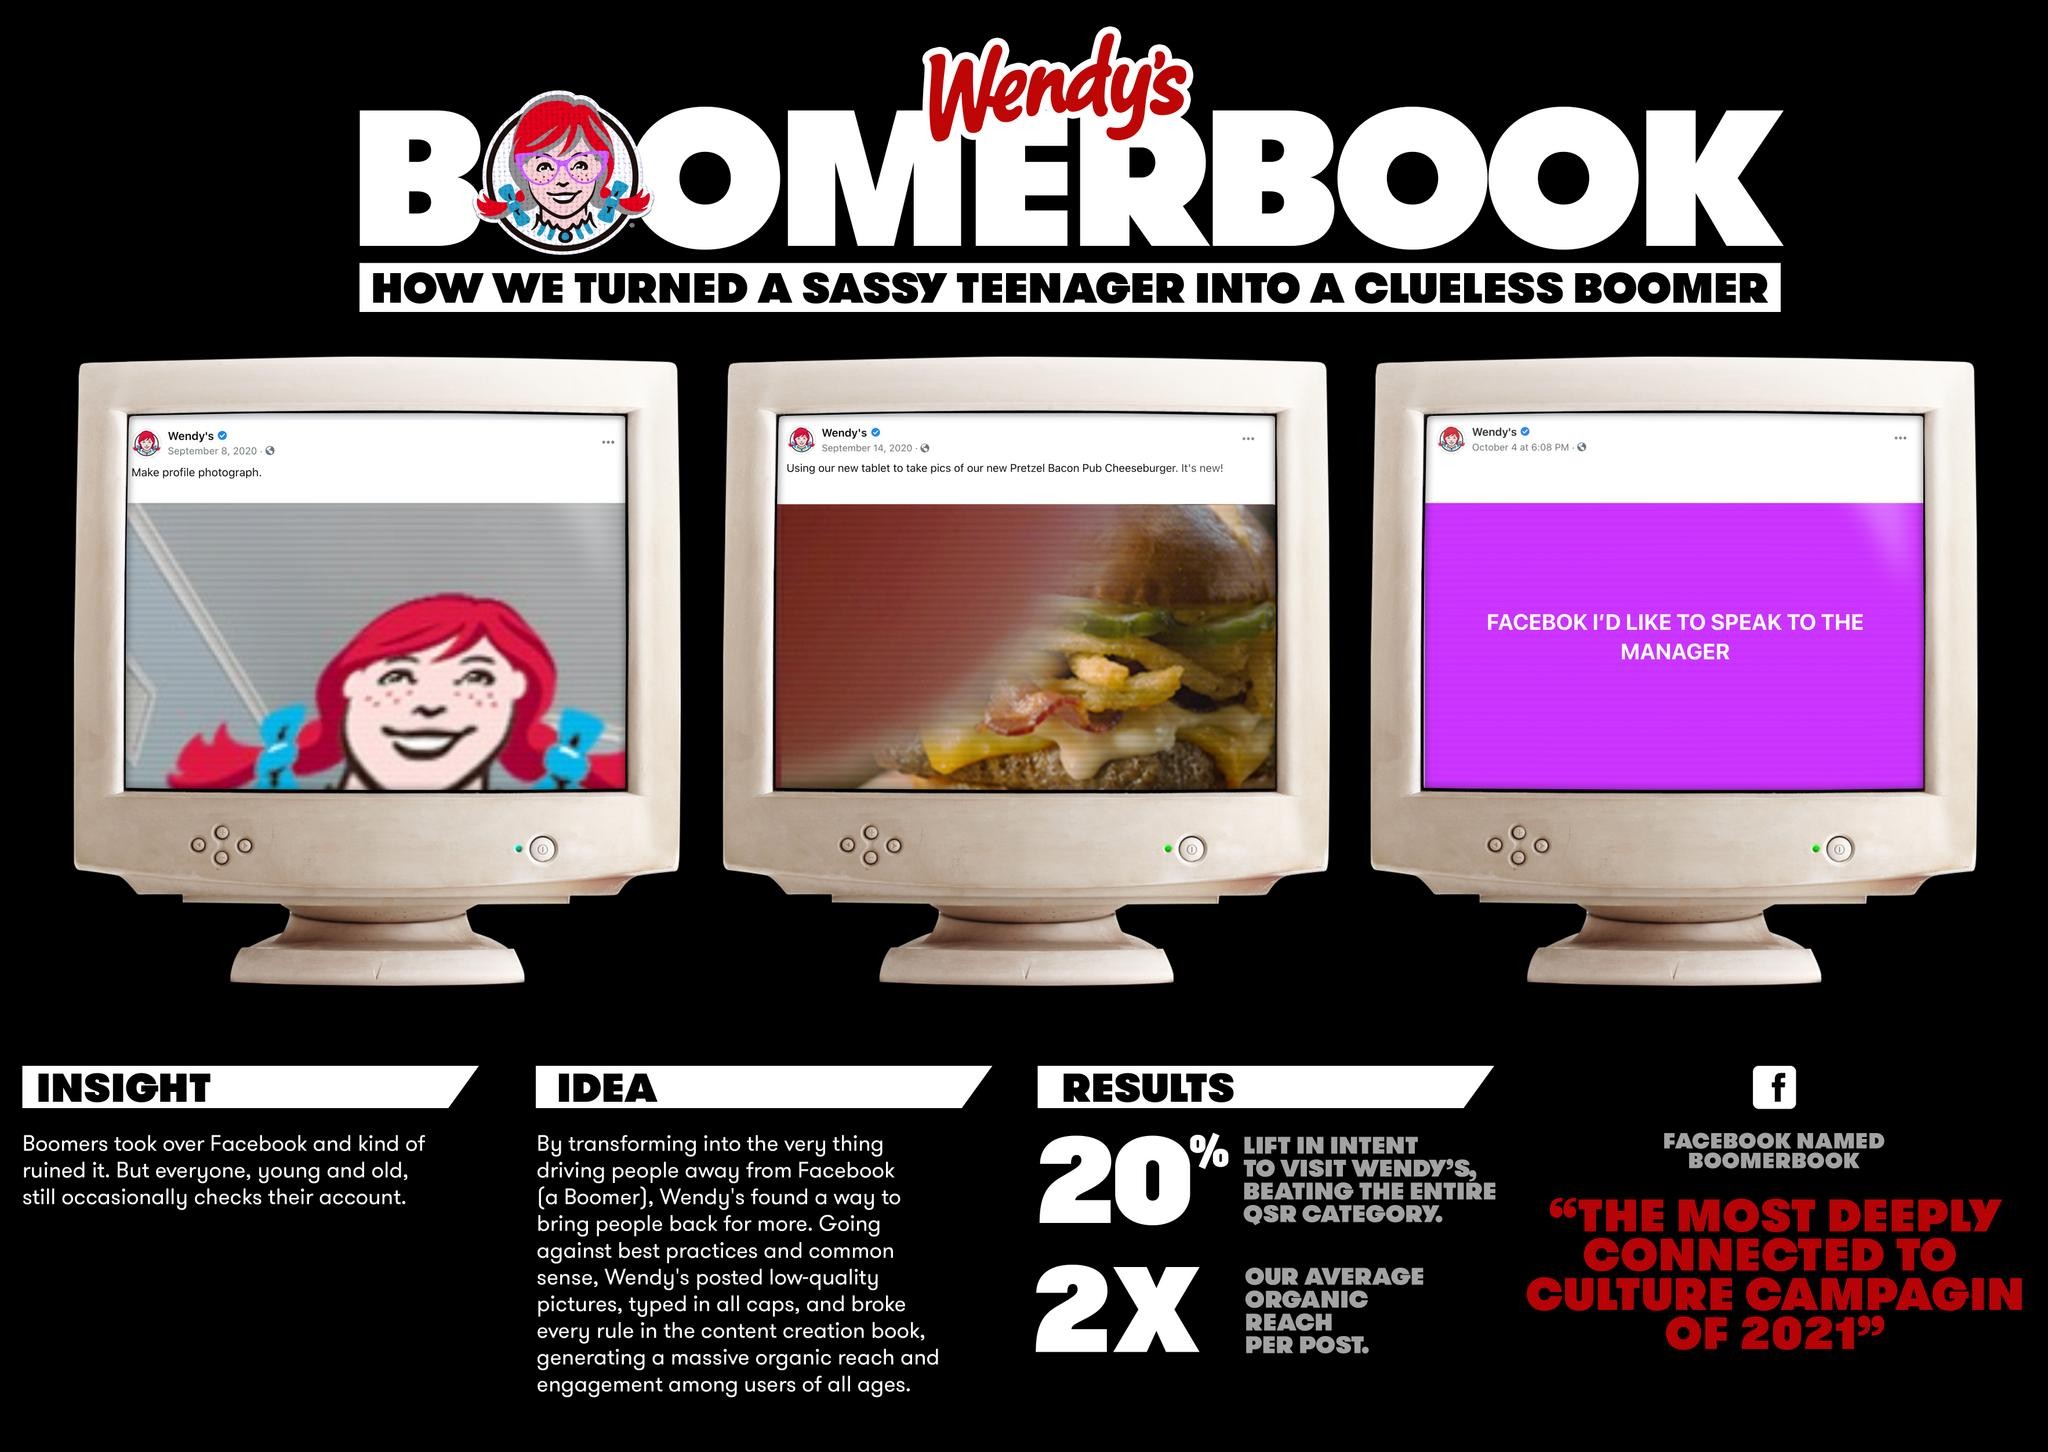 Boomerbook